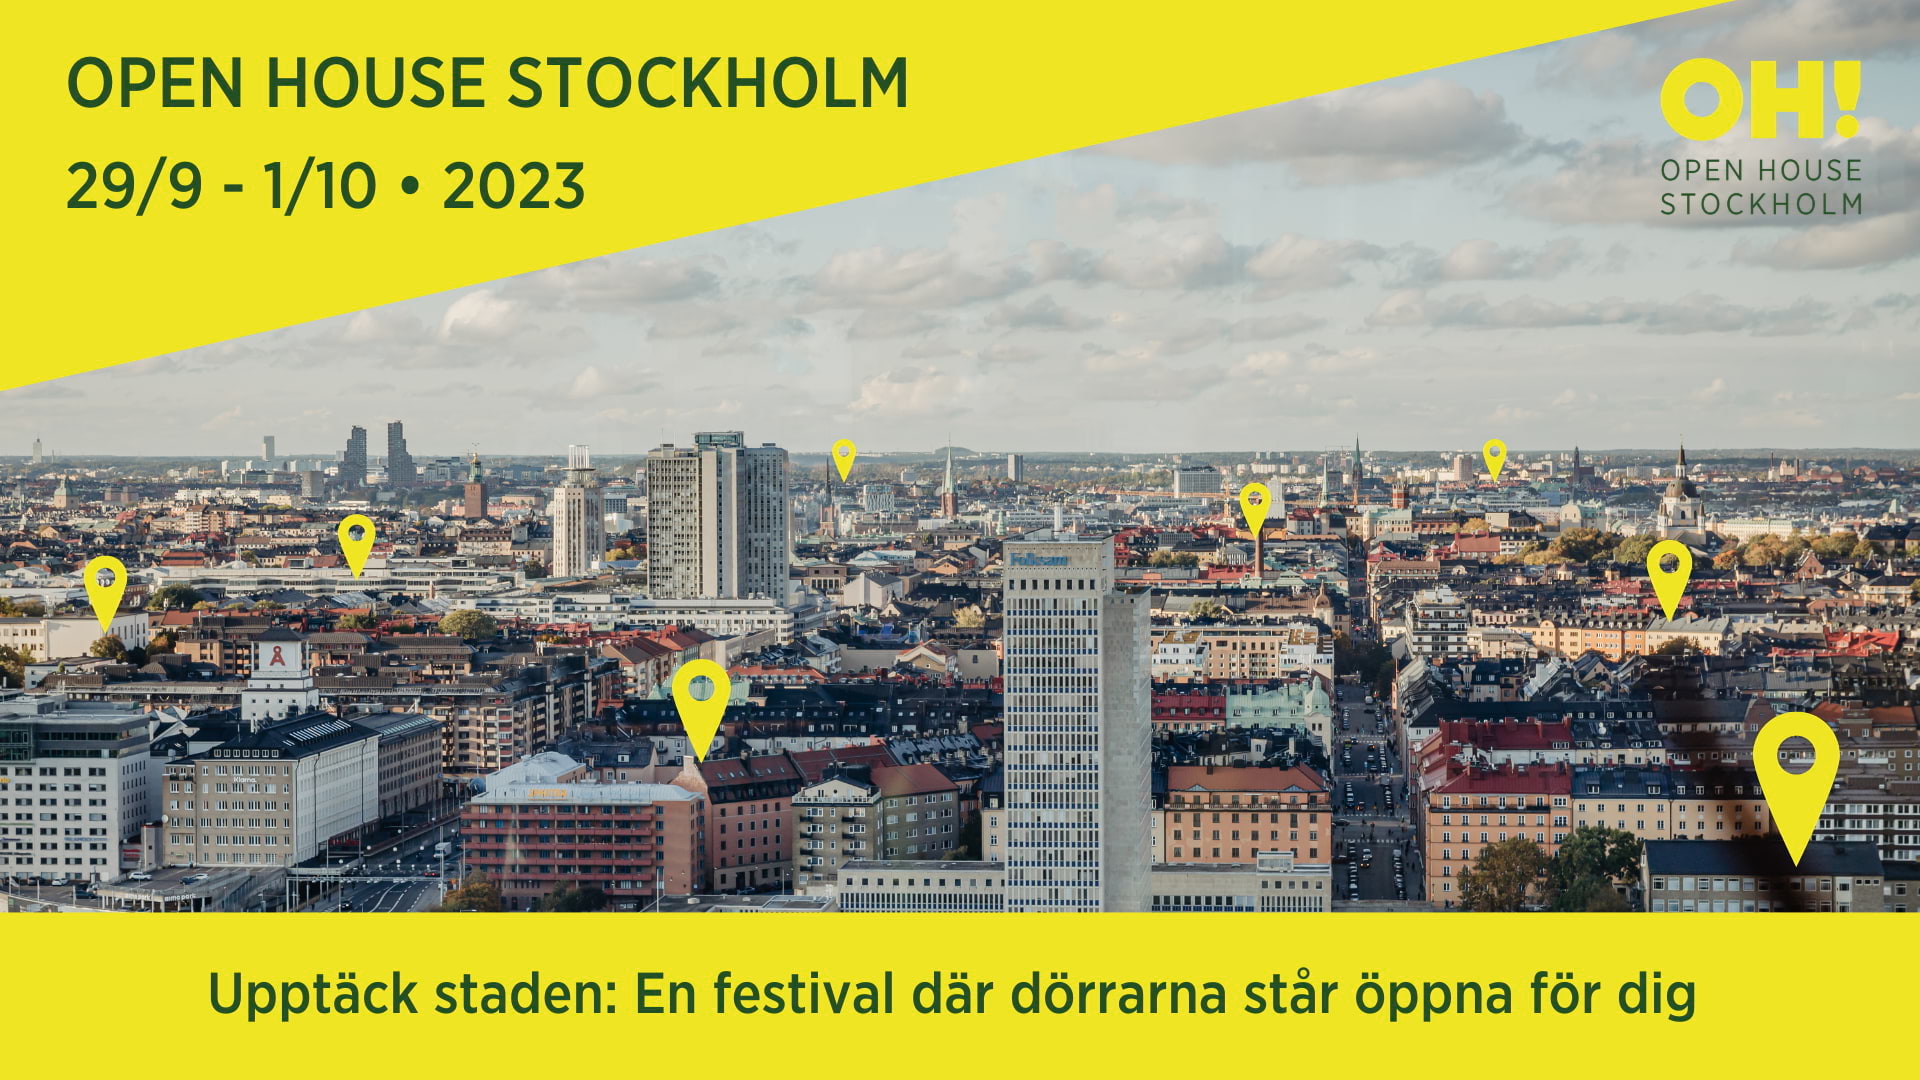 Upptäck staden under festivalen Open House Stockholm